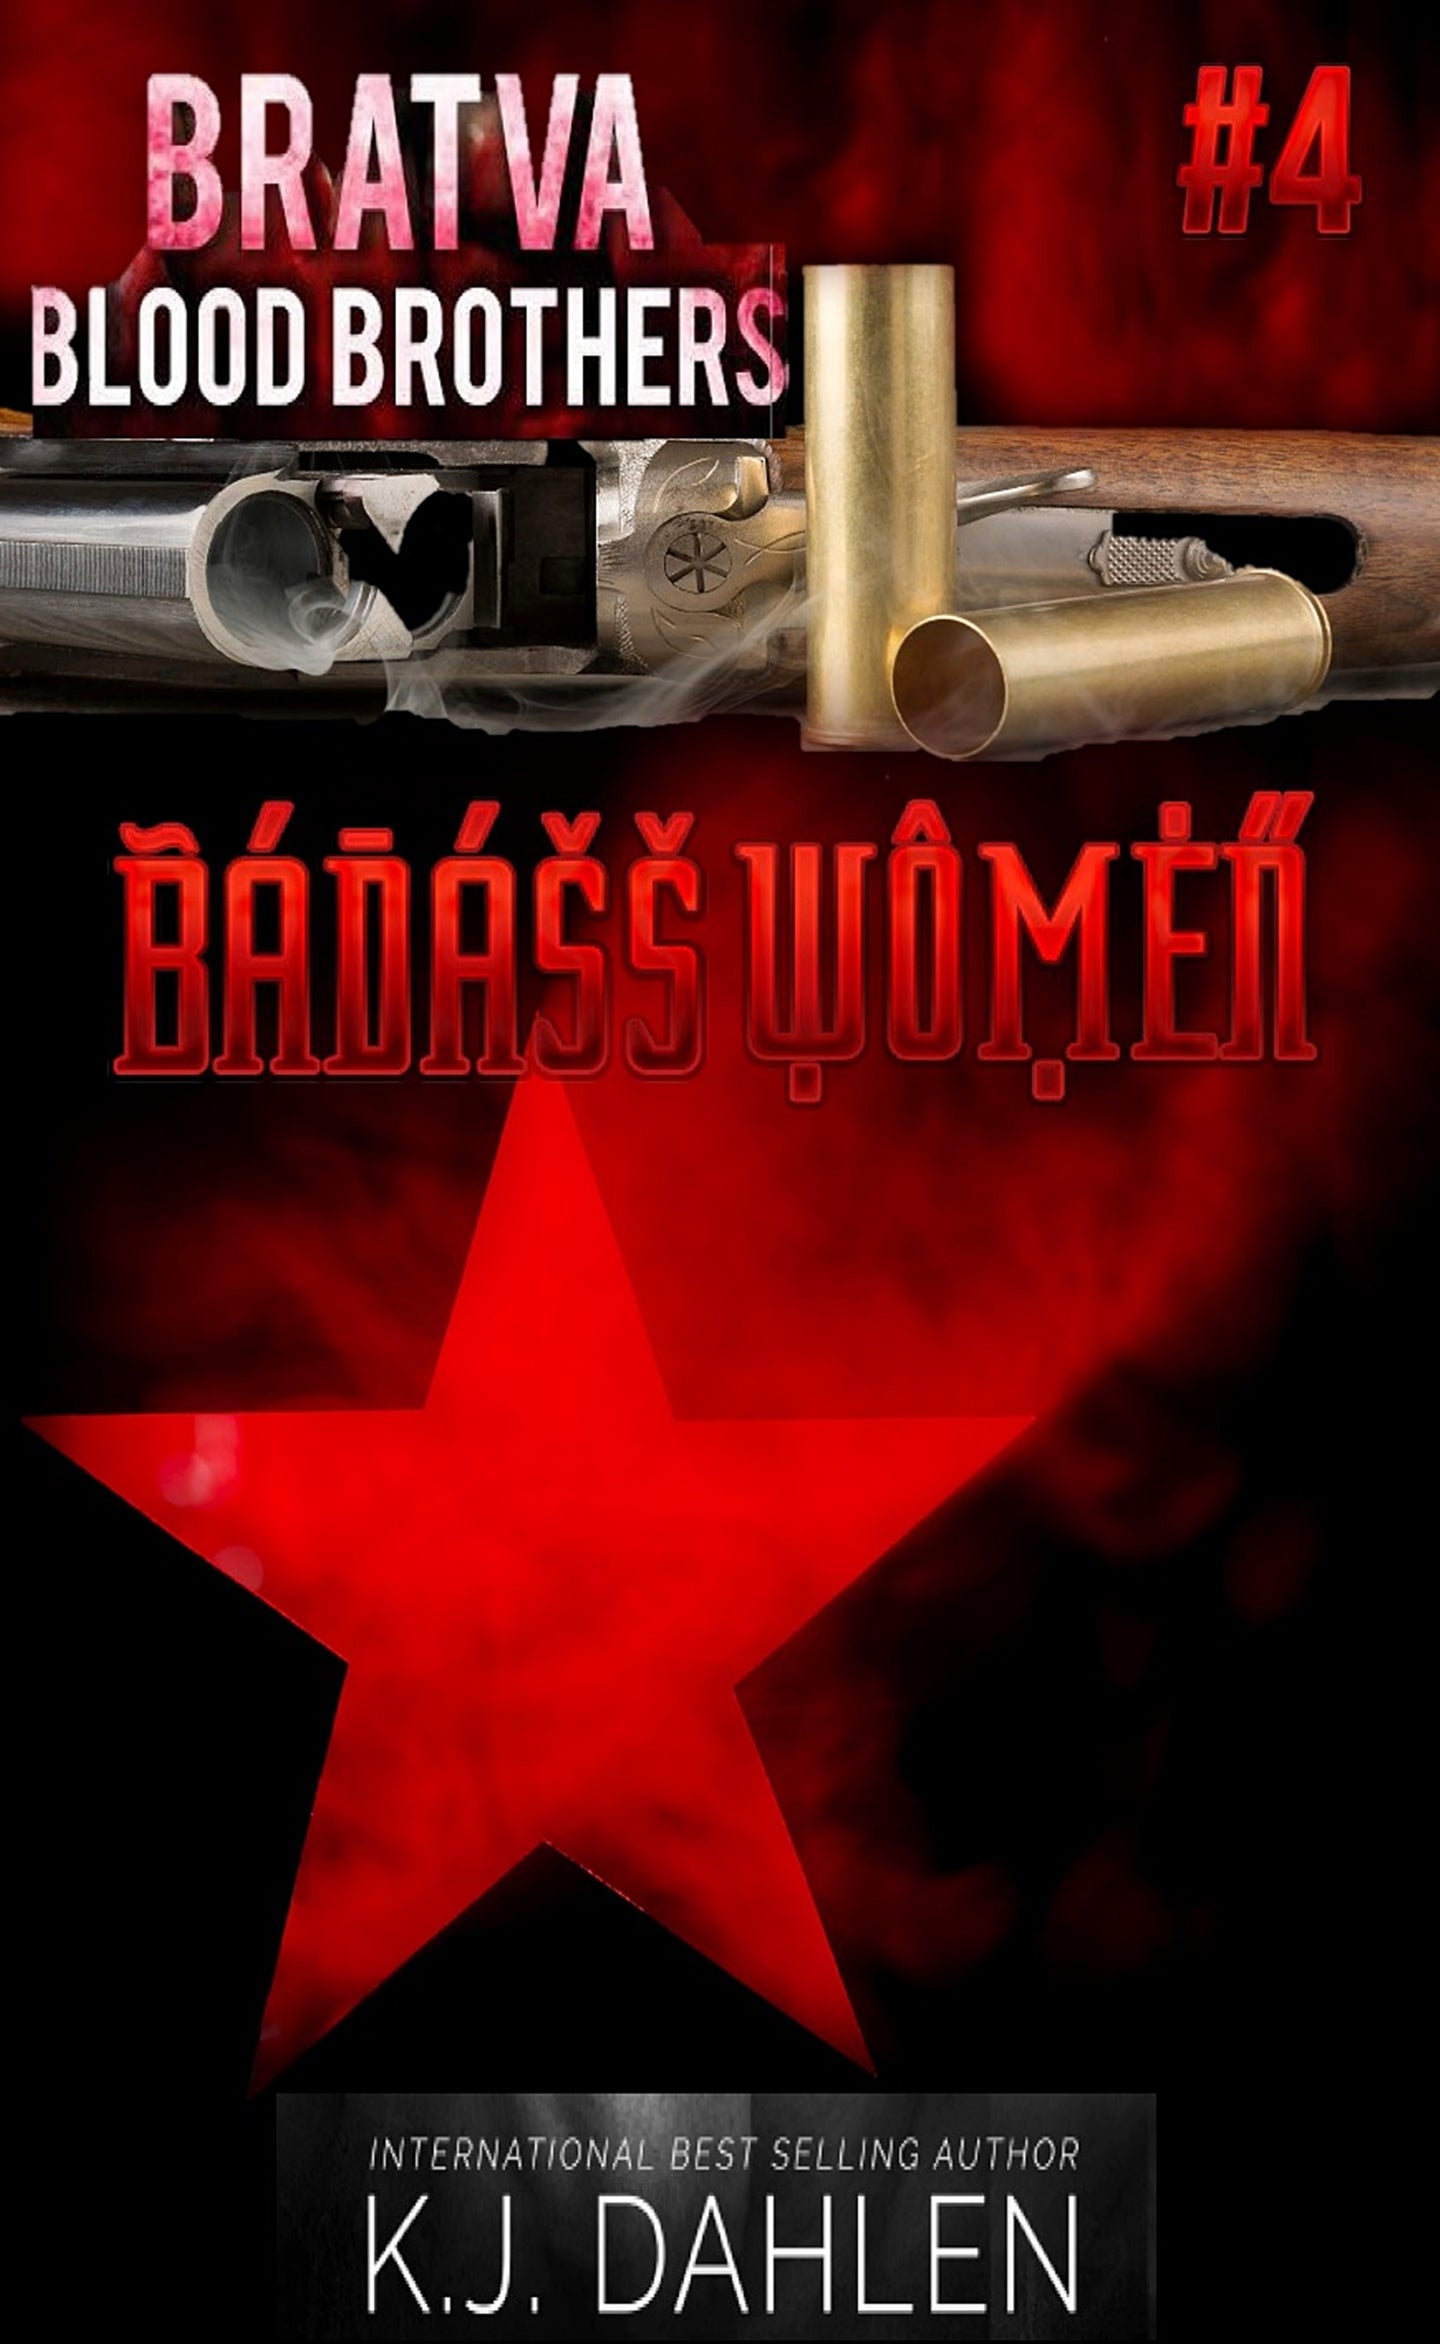 Badass Women#4-Bratva Blood Brothers-Single